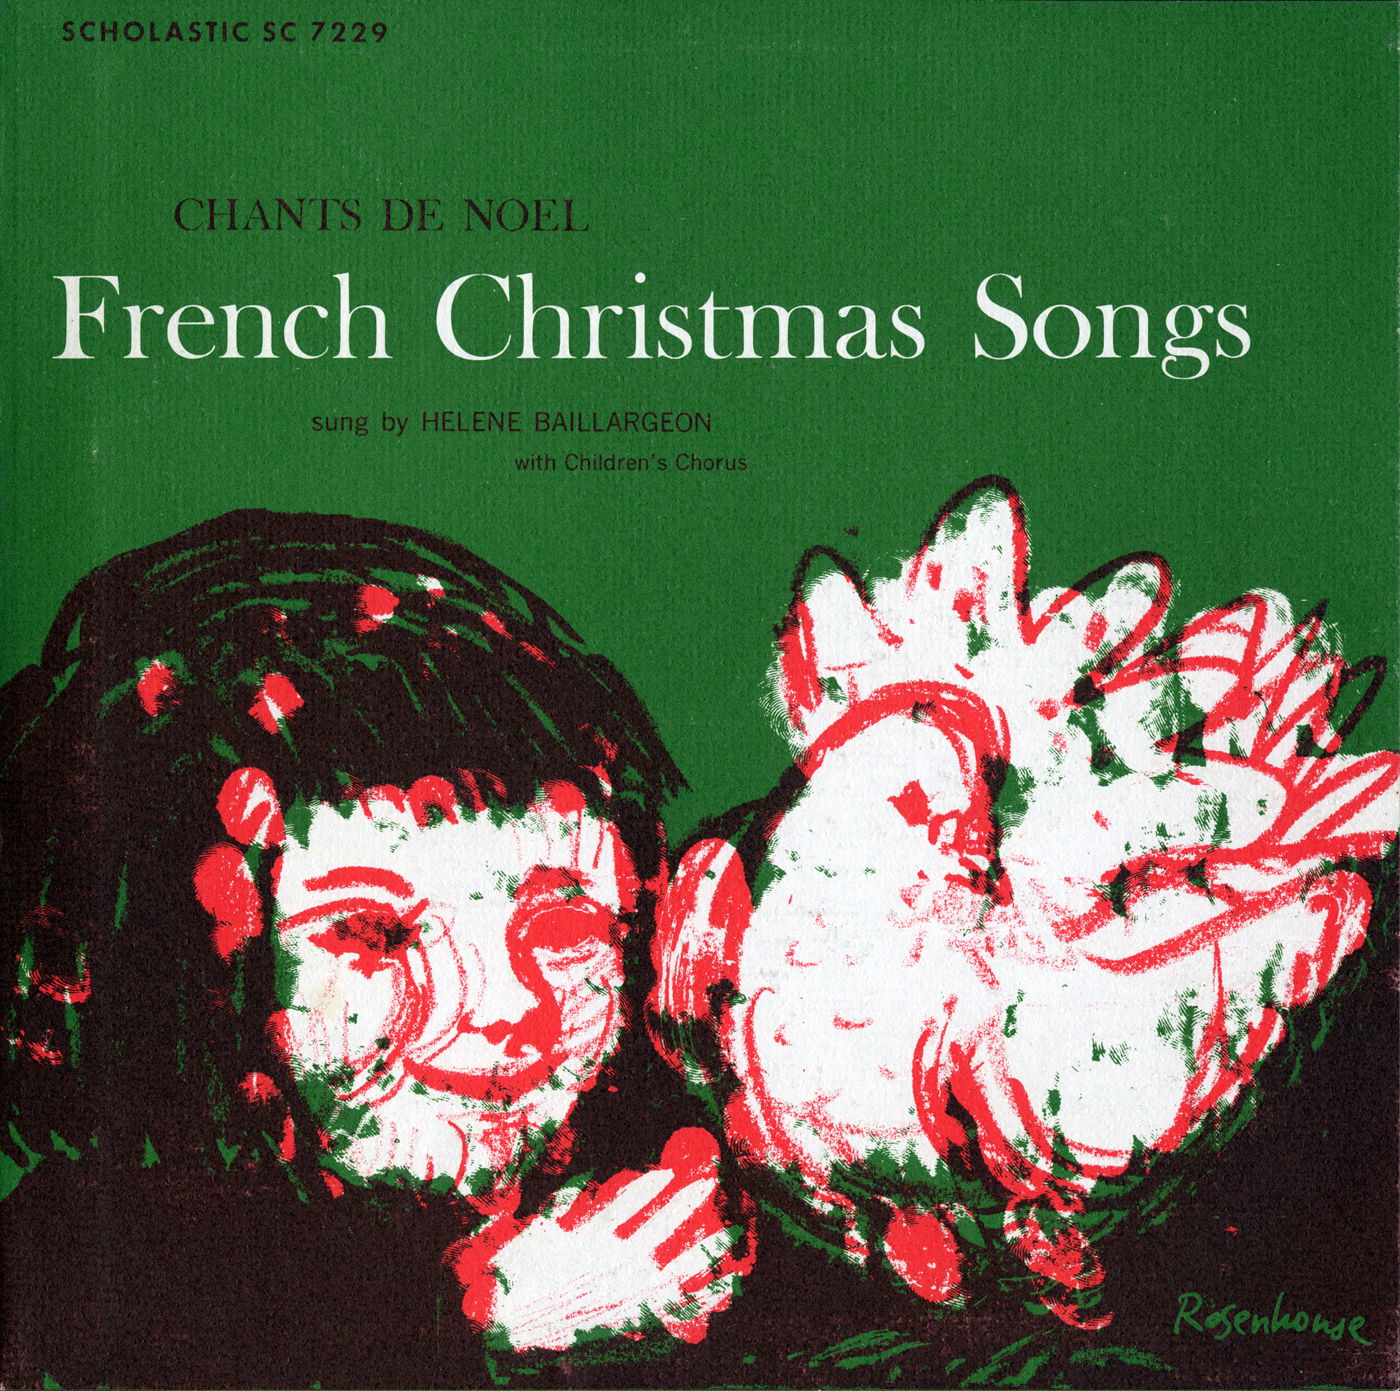 50 chansons de Noël - Compilation by Various Artists